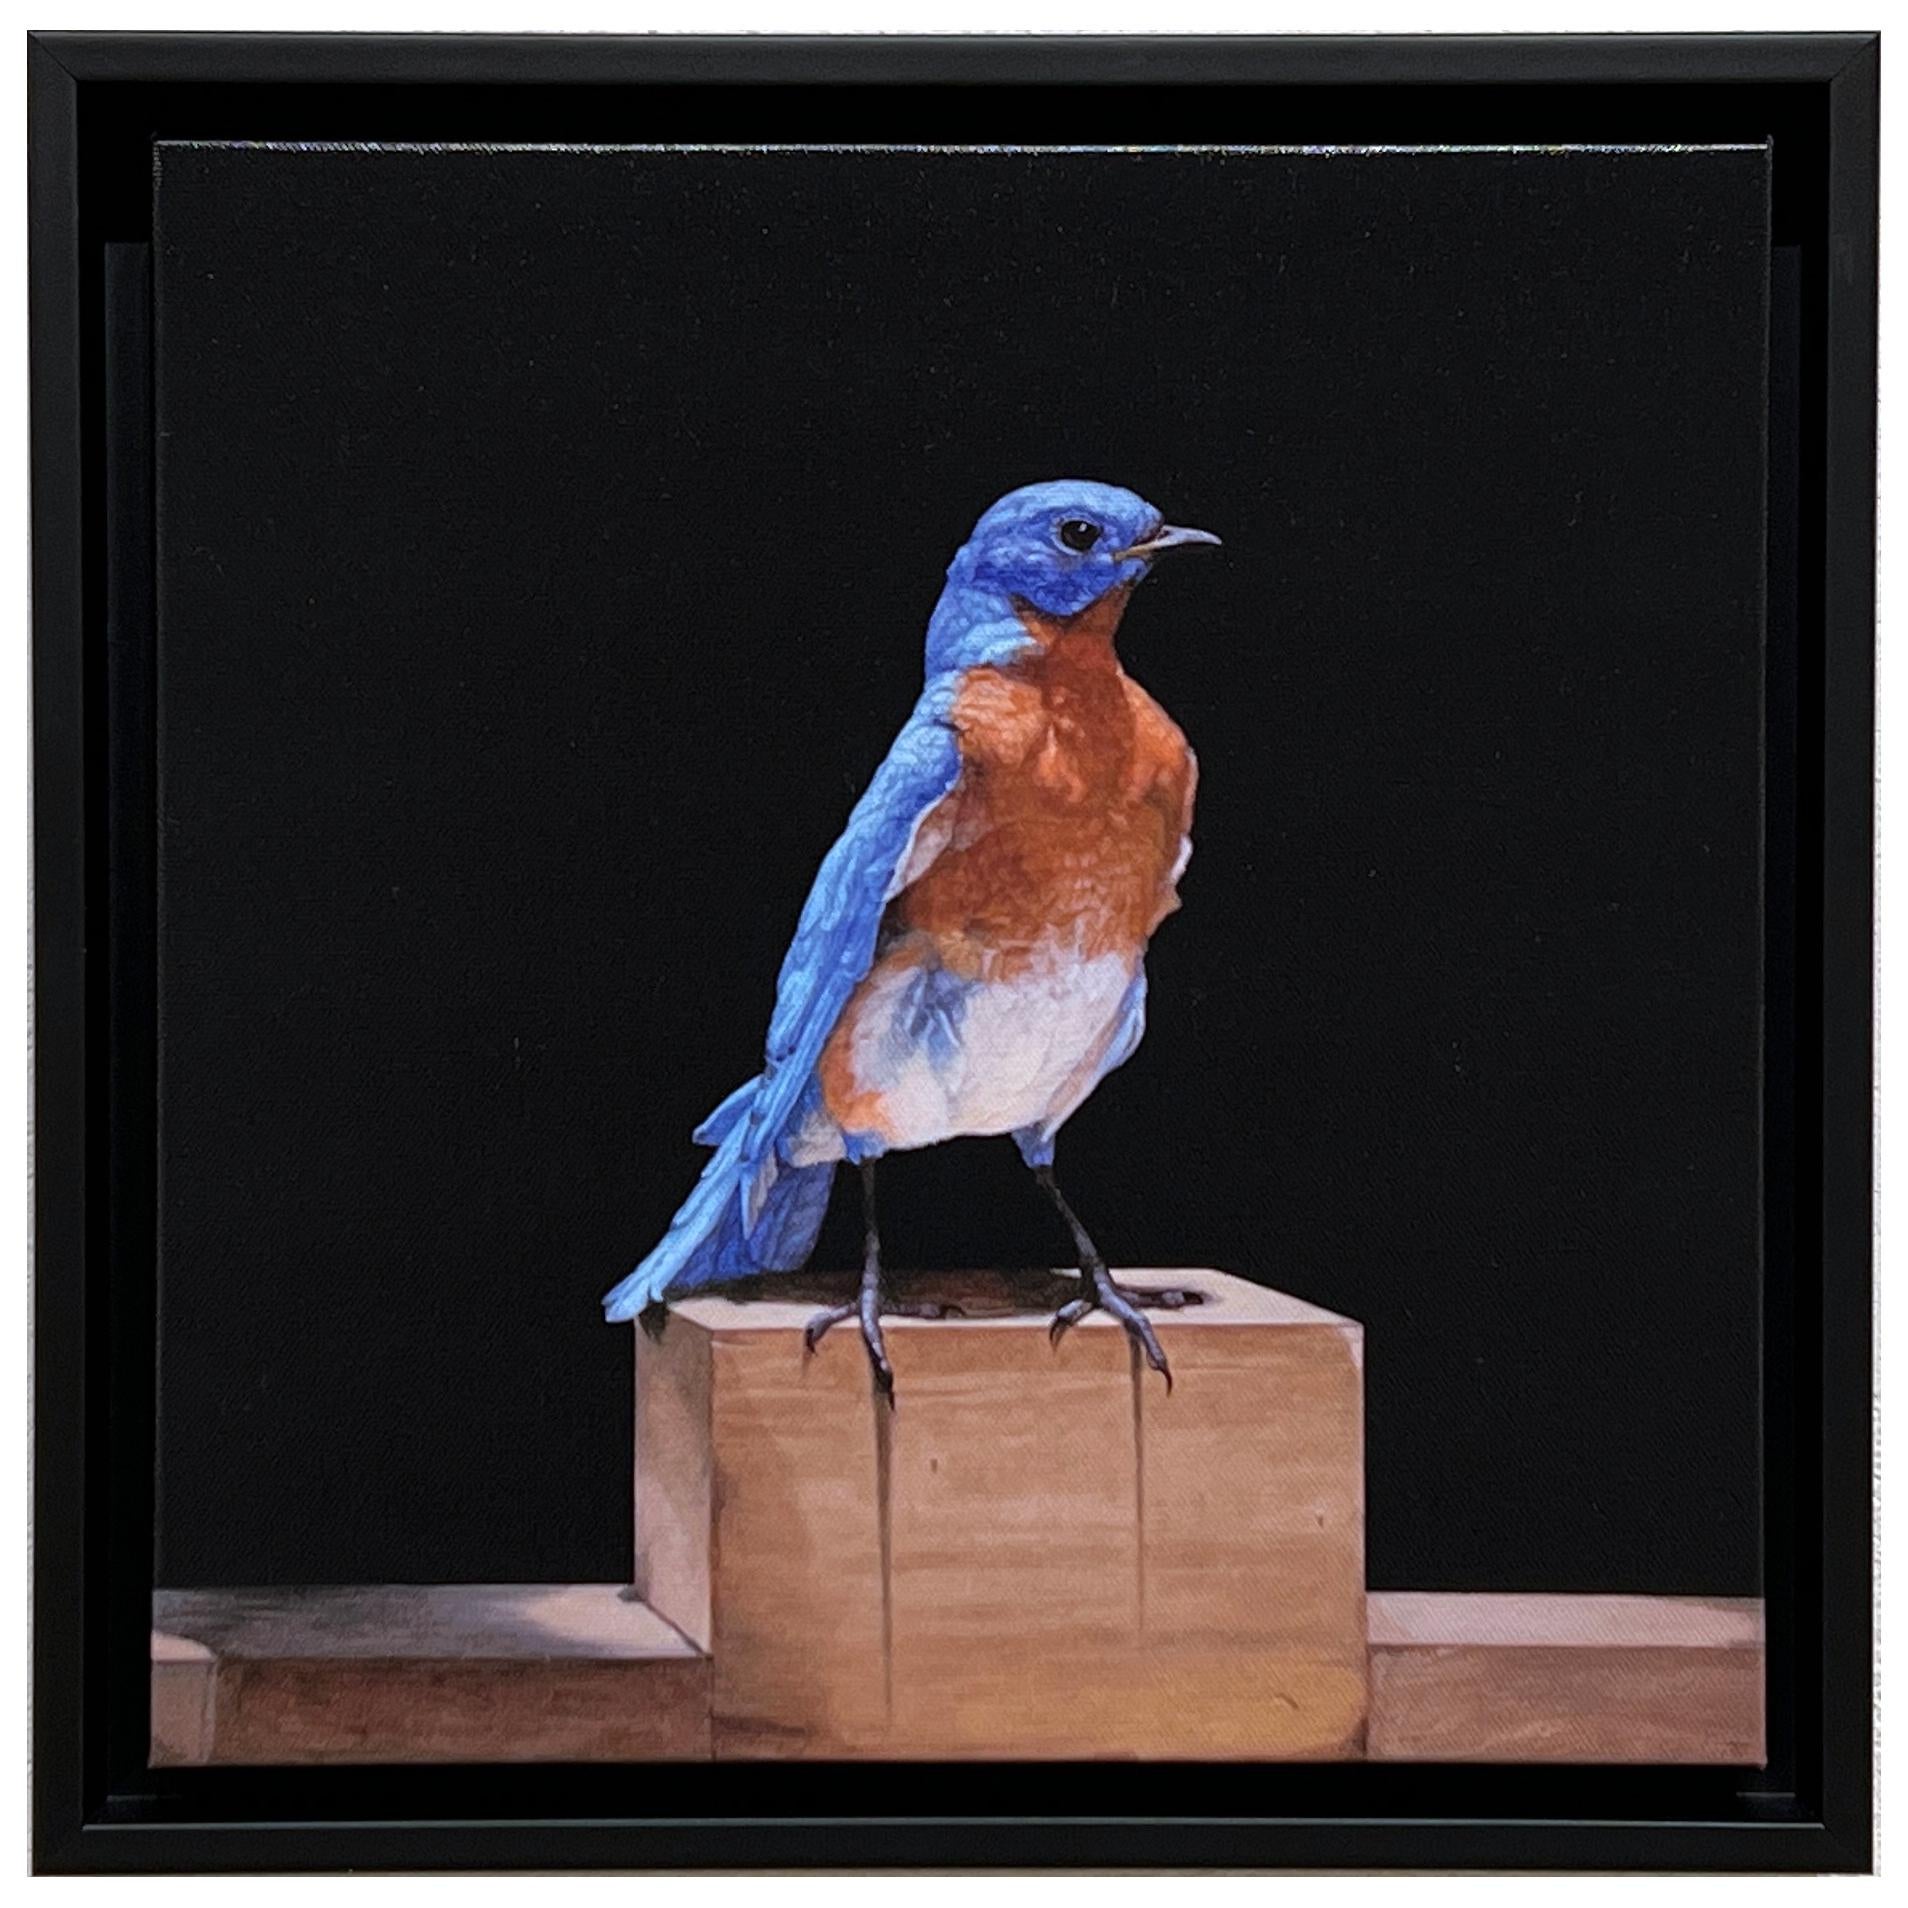 EASTERN BLUE BIRD - Contemporary / Photorealism / Tierdruck